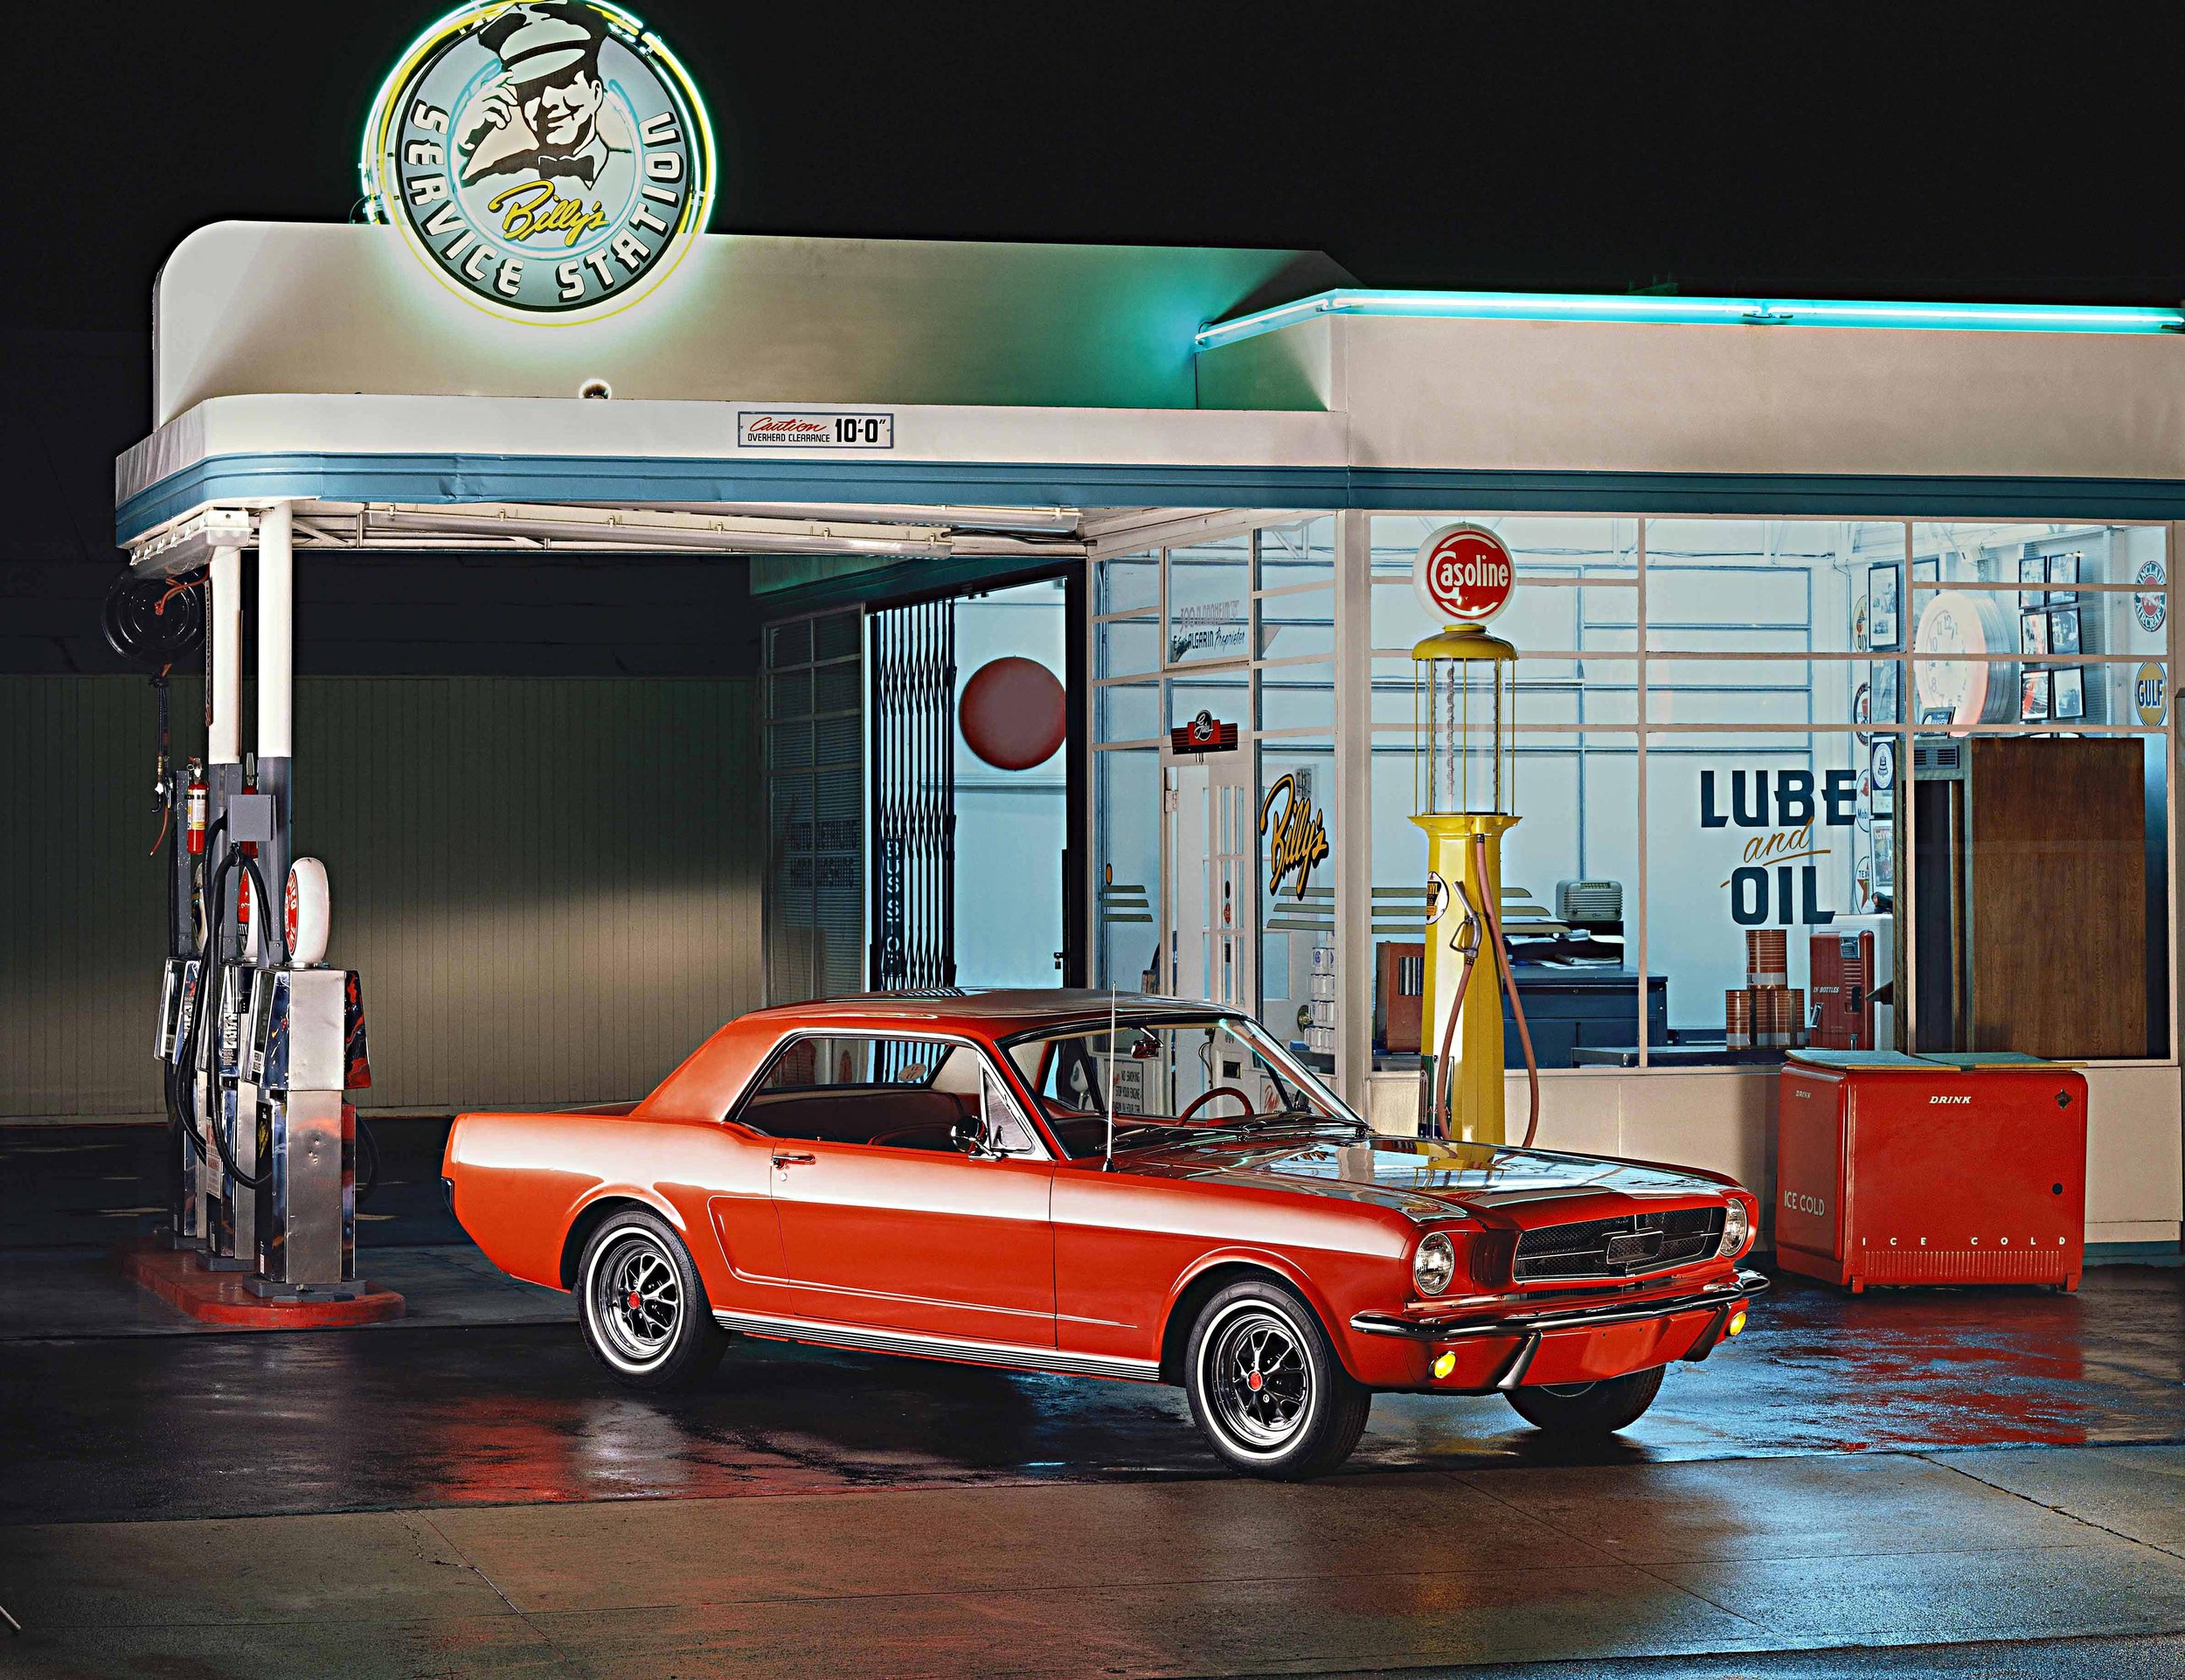 Roadside.American Gas Station_edited-min.jpg